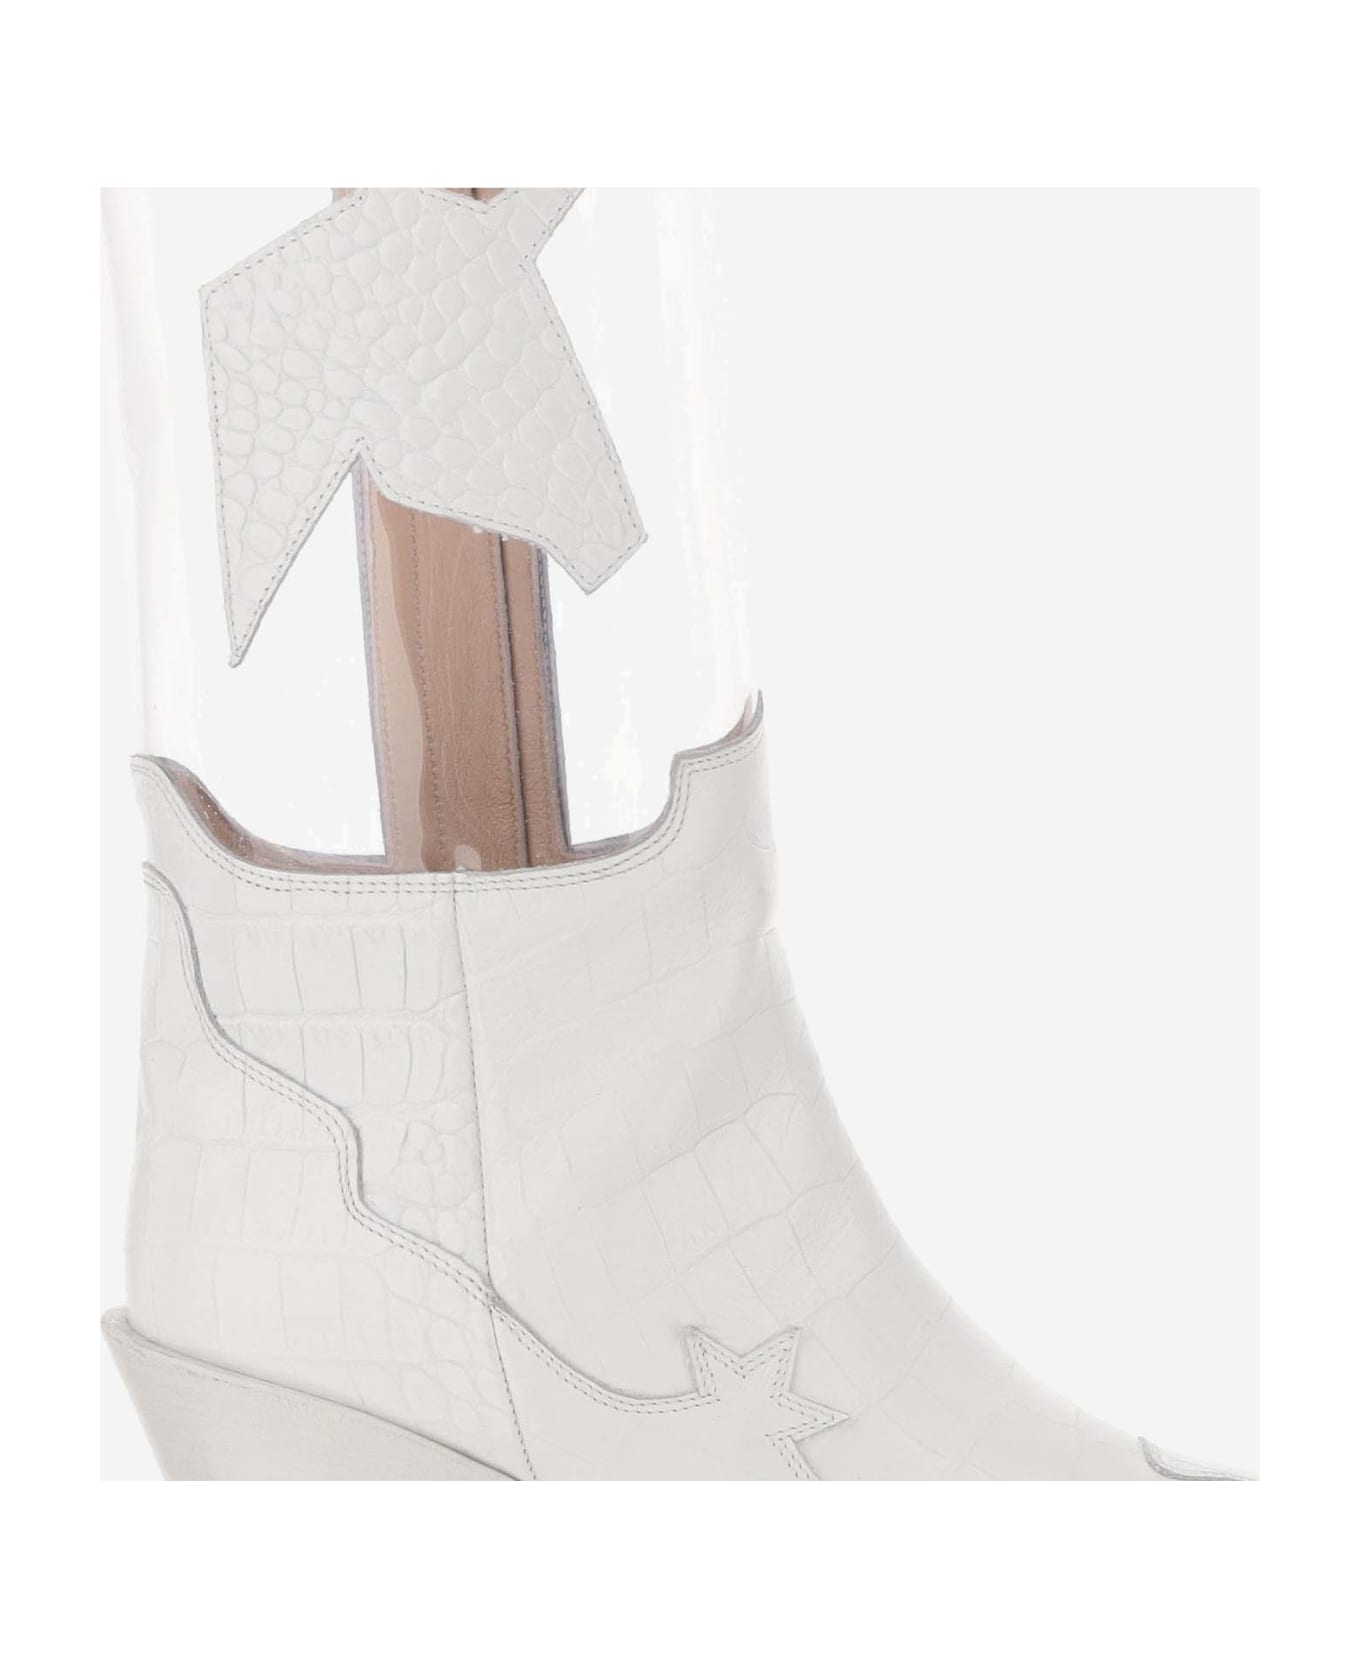 Francesca Bellavita High Cowboy Boots Amazon - White ブーツ